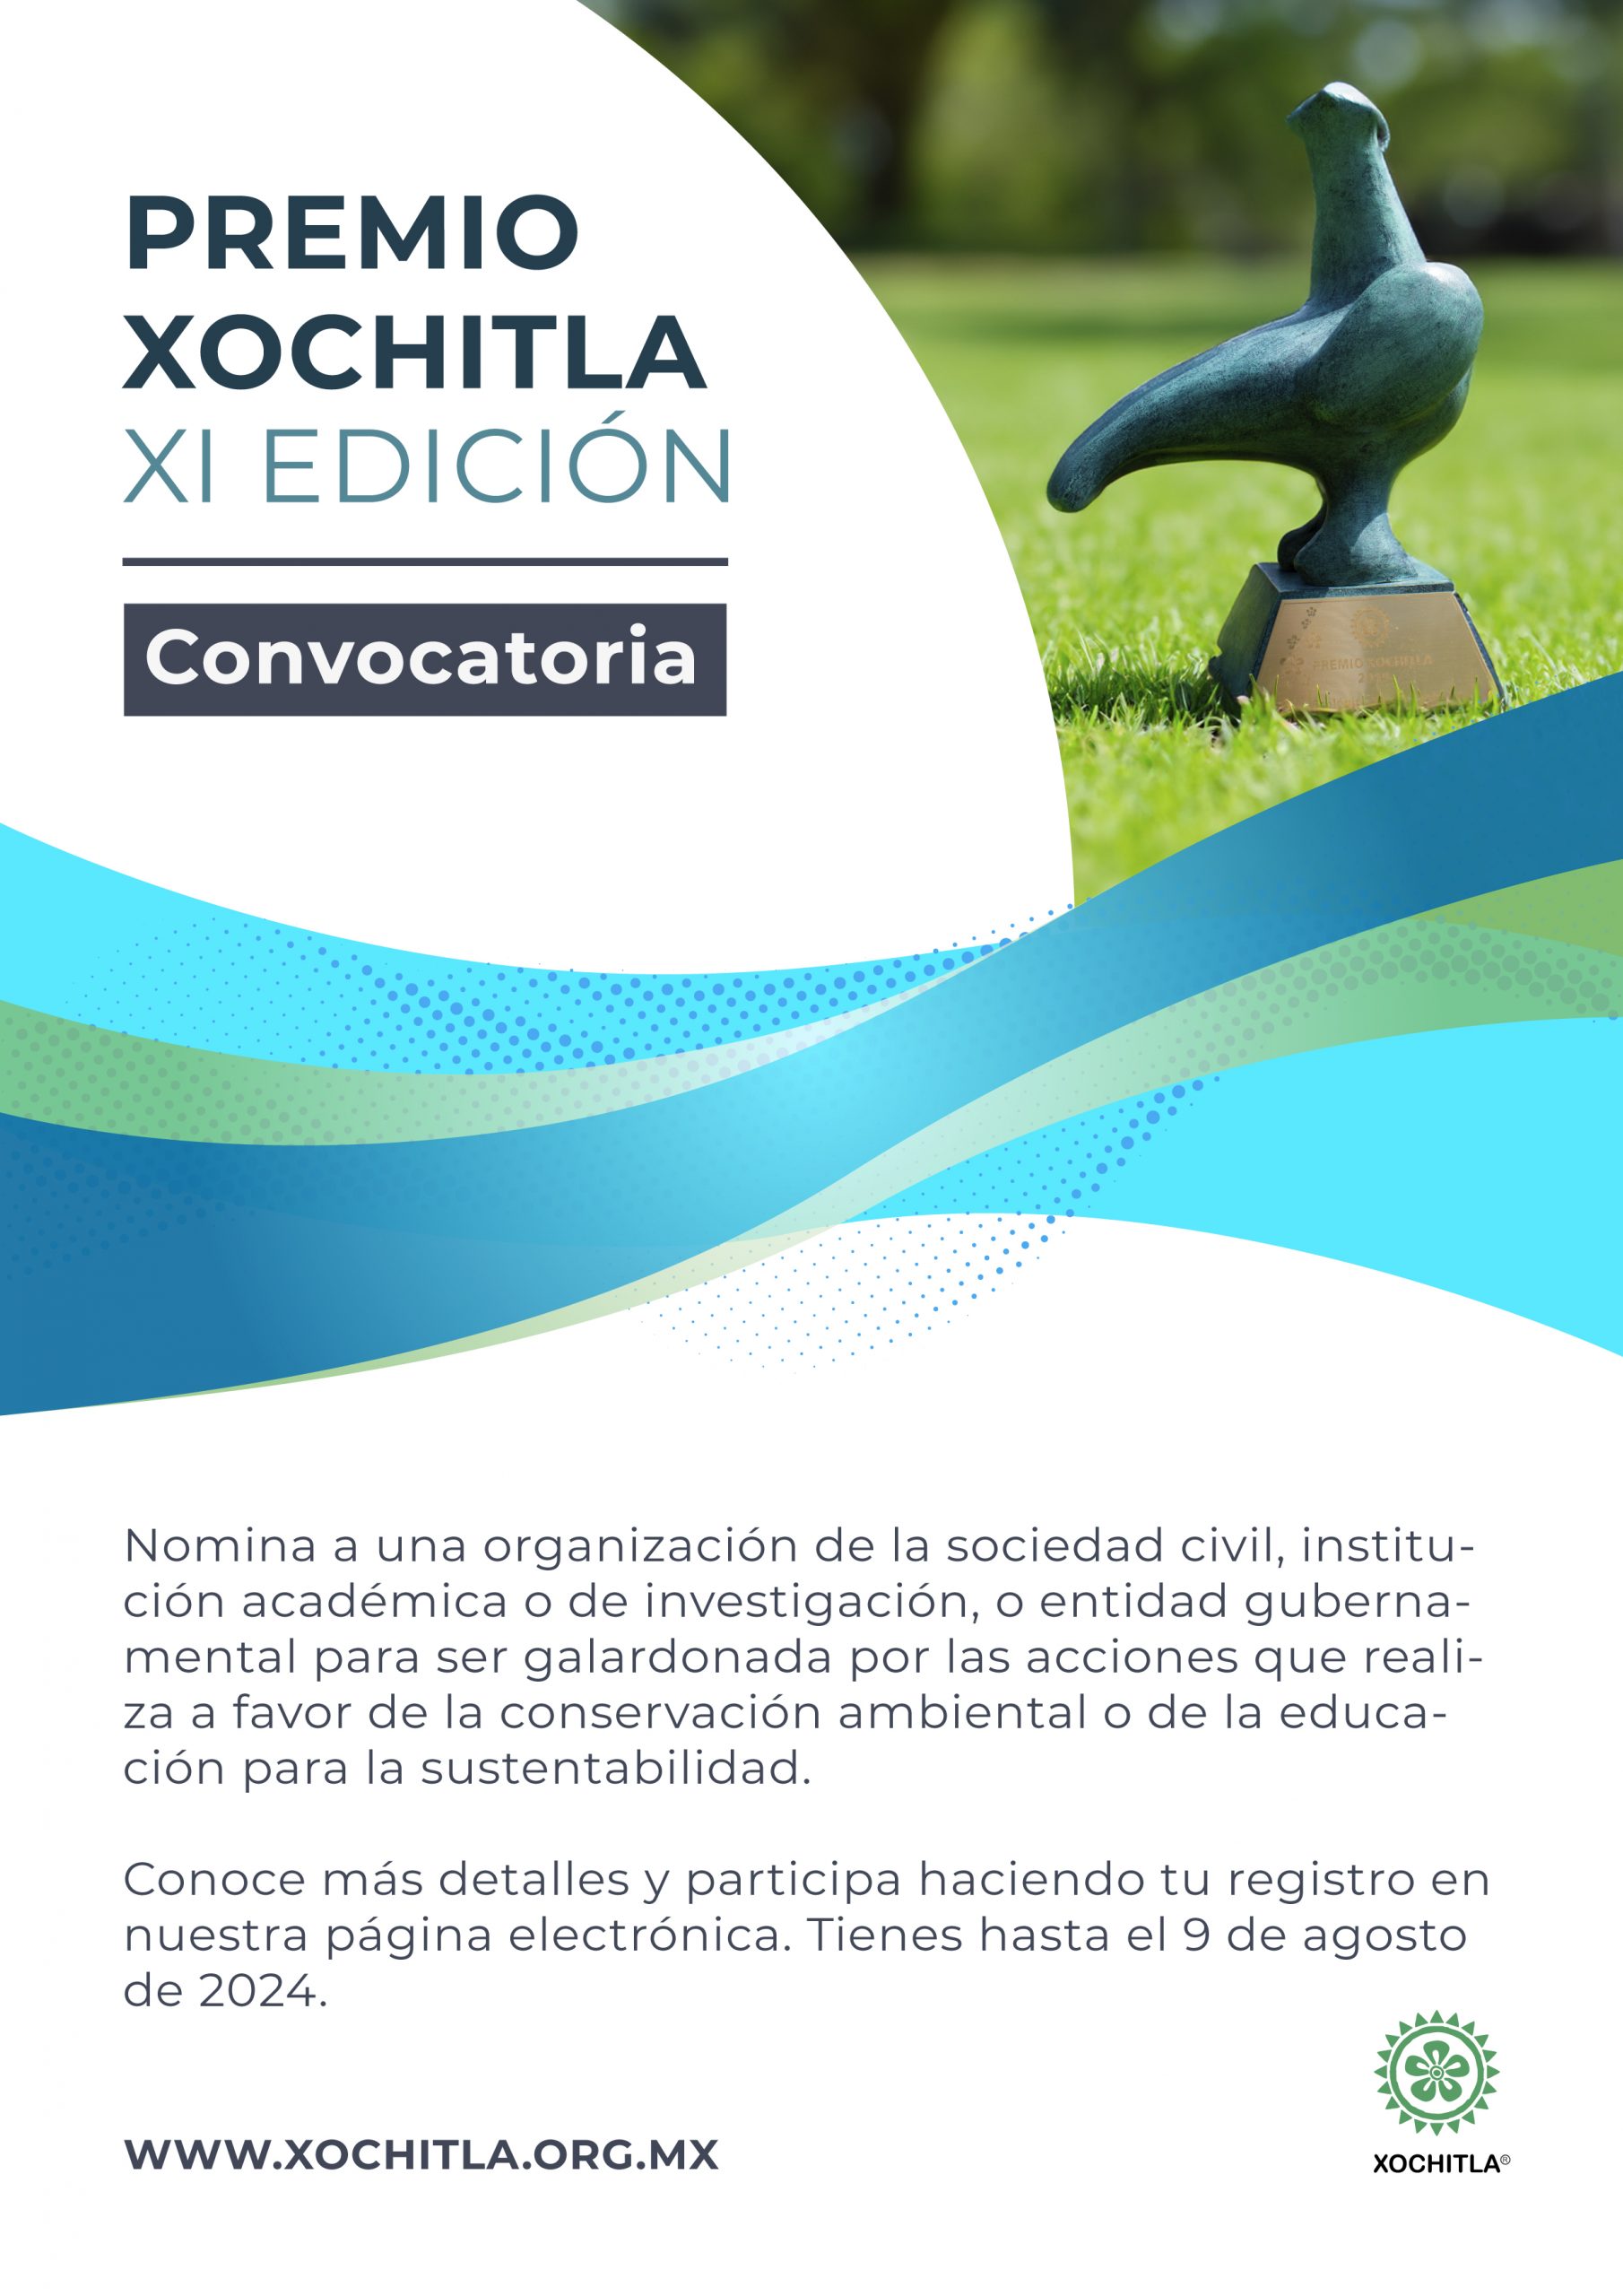 Premio Xochitla, XI Edición (Xochitla)